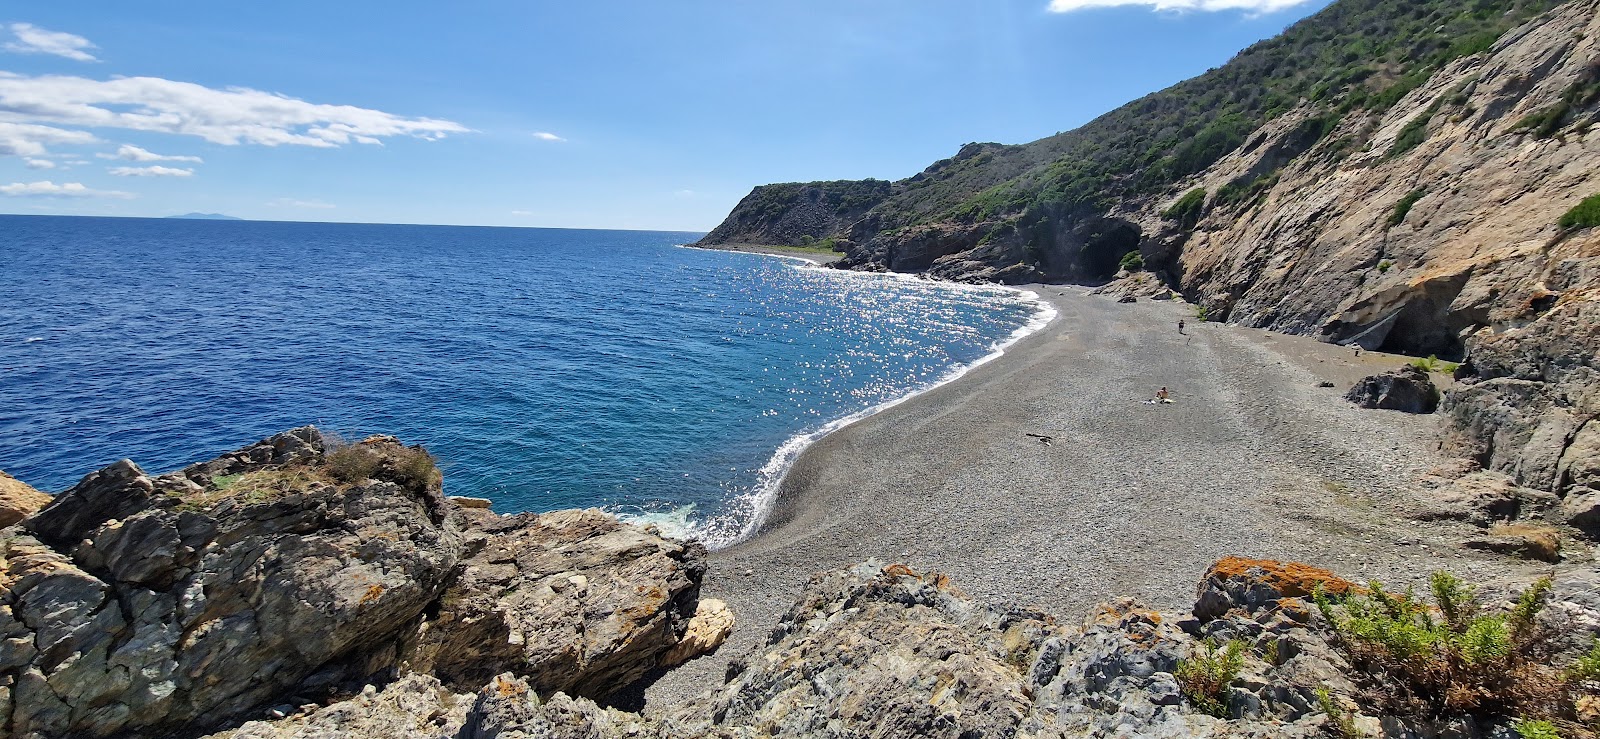 Foto van Spiaggia del Ginepro met hoog niveau van netheid